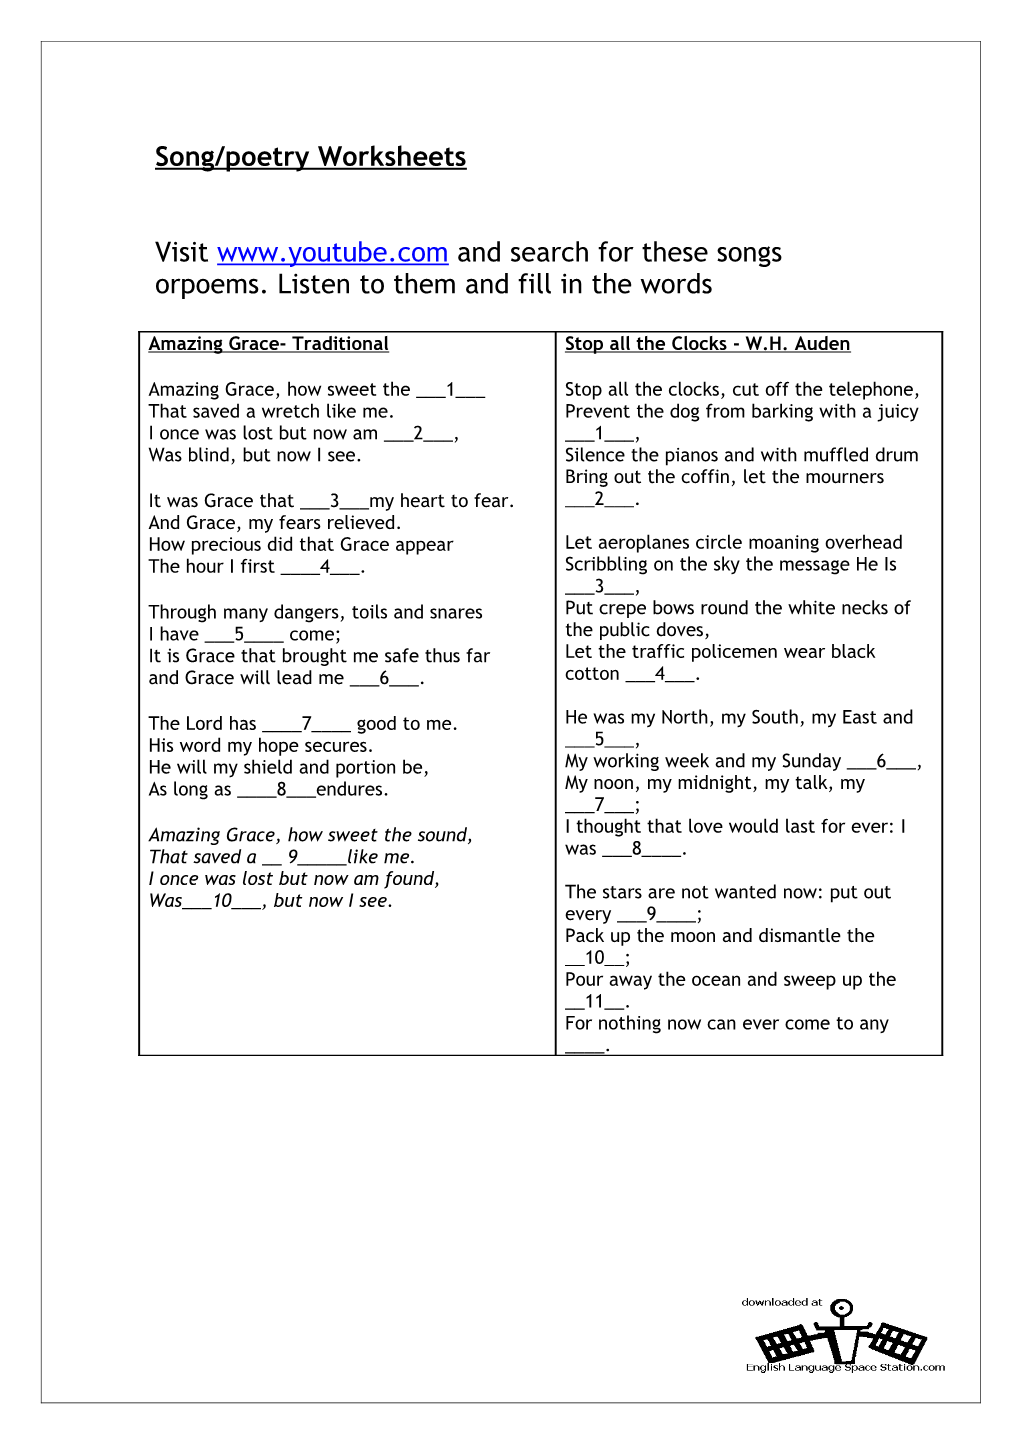 Song/Poetry Worksheets